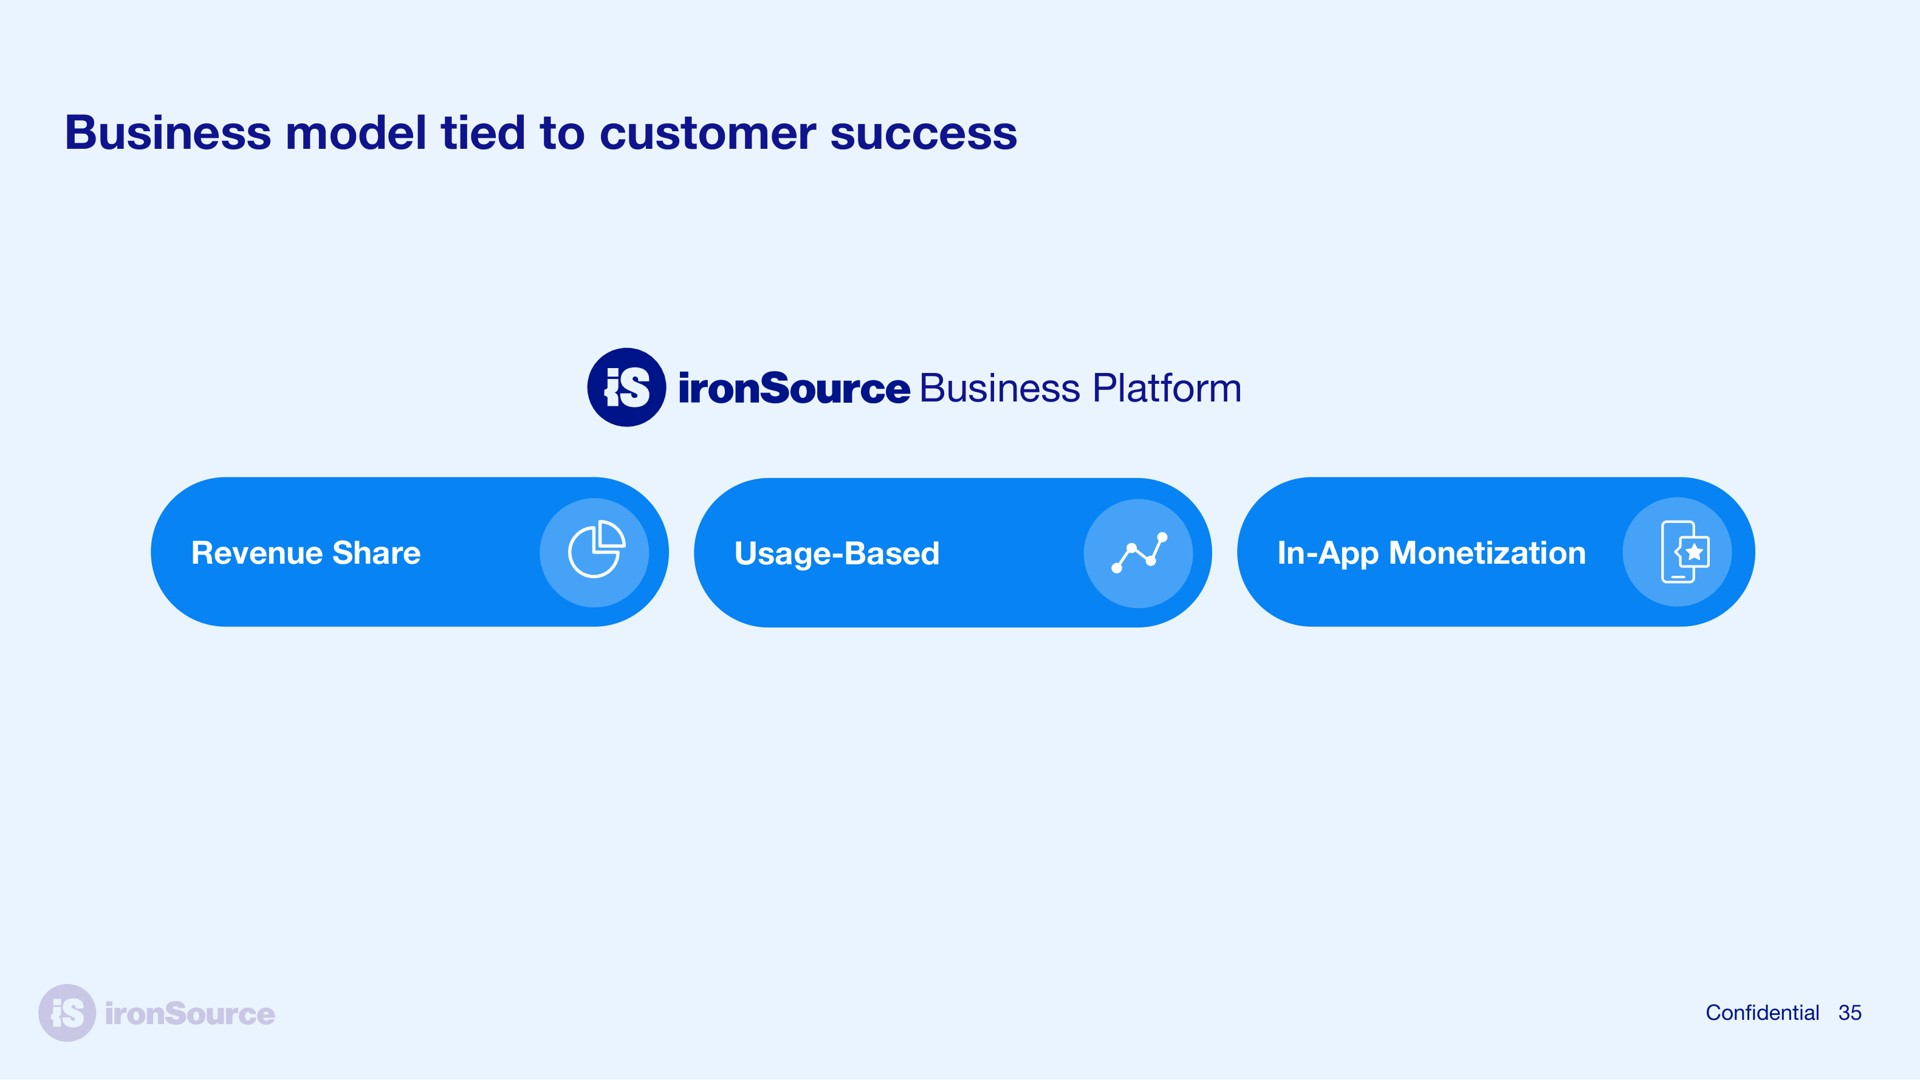 business model tied to customer success business platform | ironSource